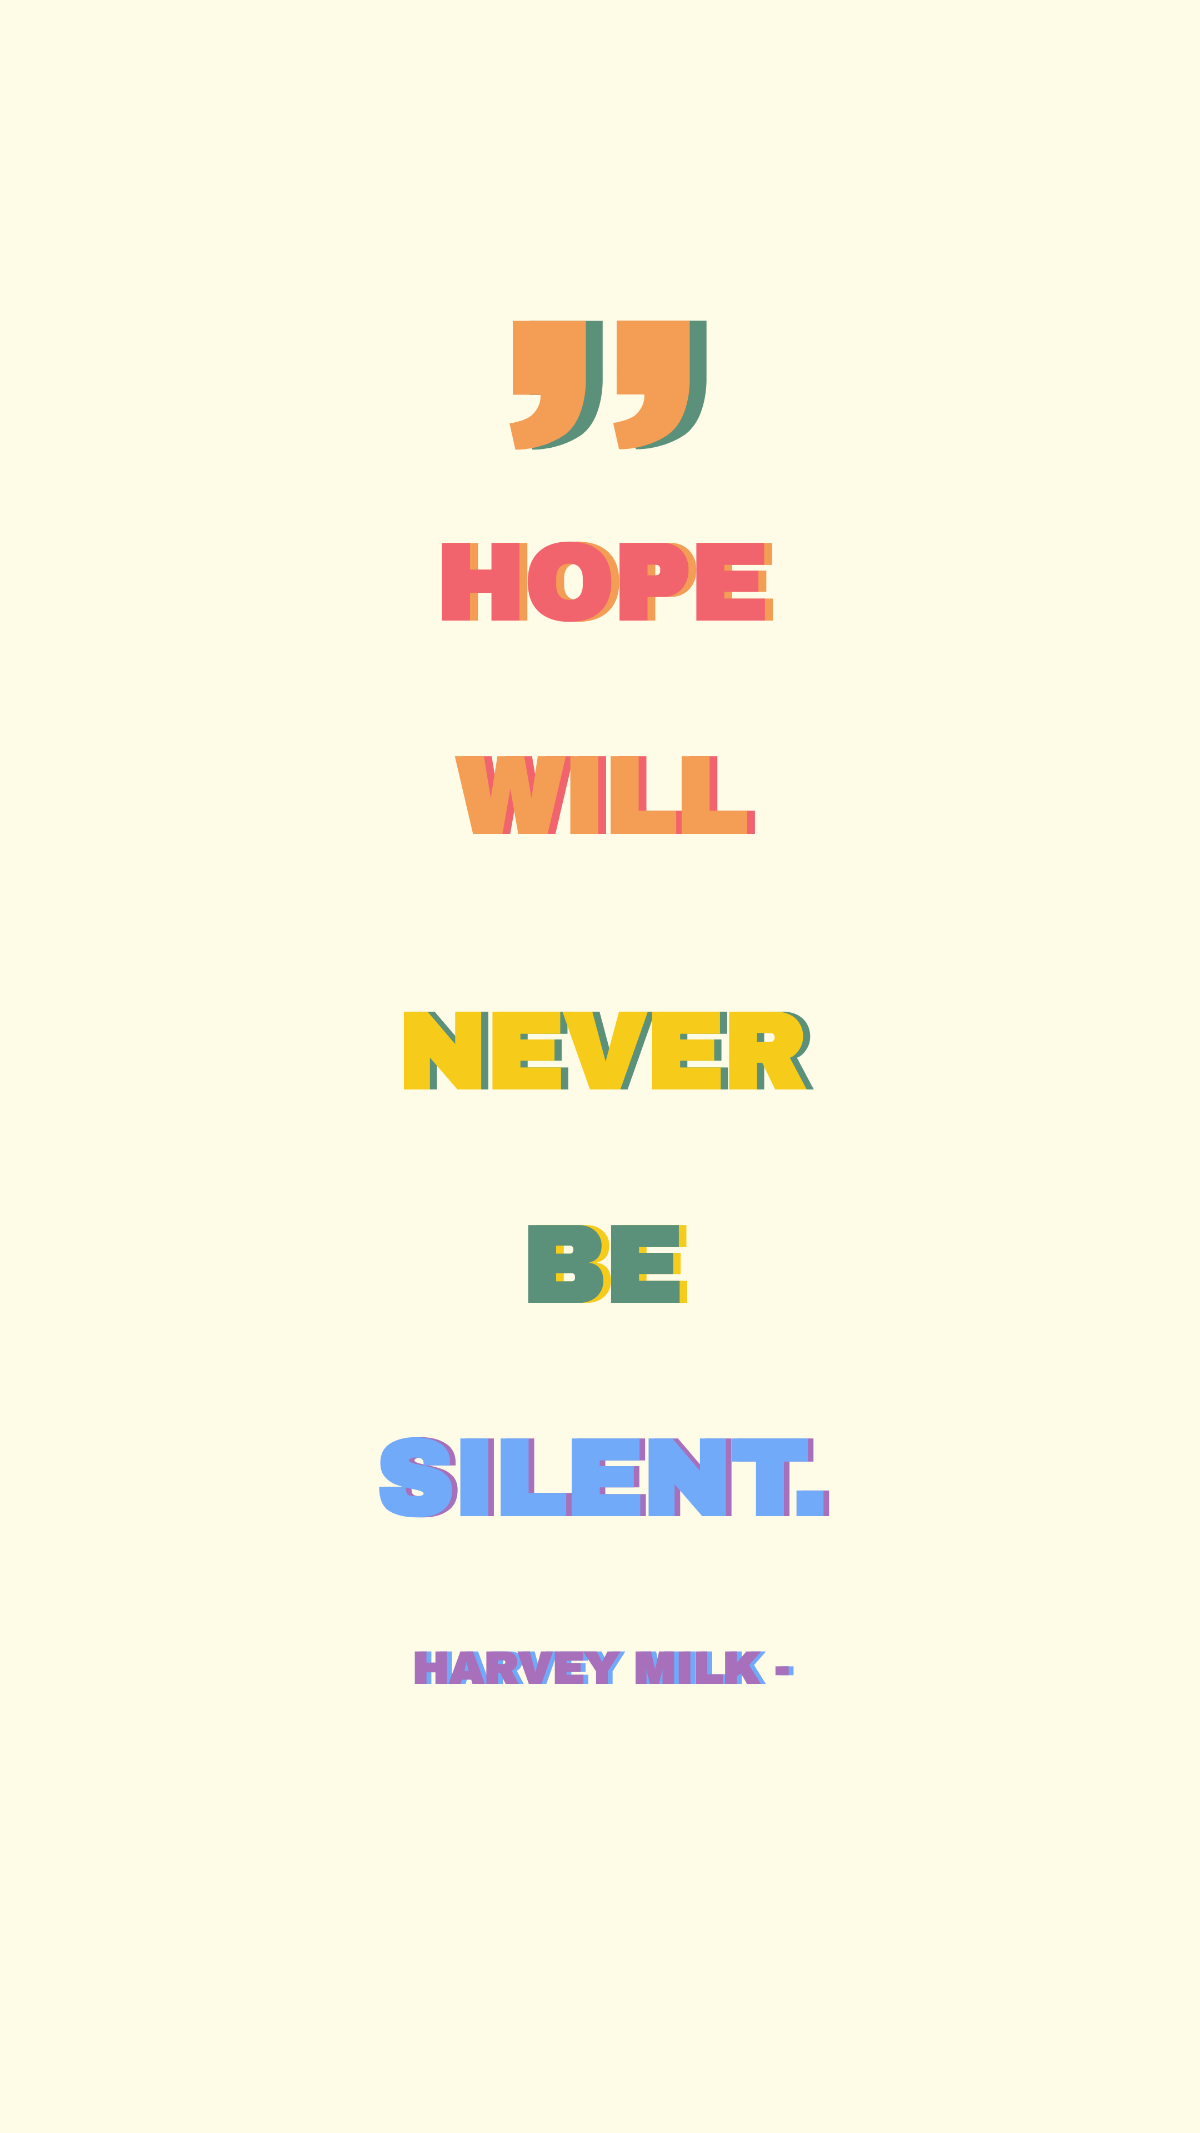 Harvey Milk - Hope will never be silent. Template